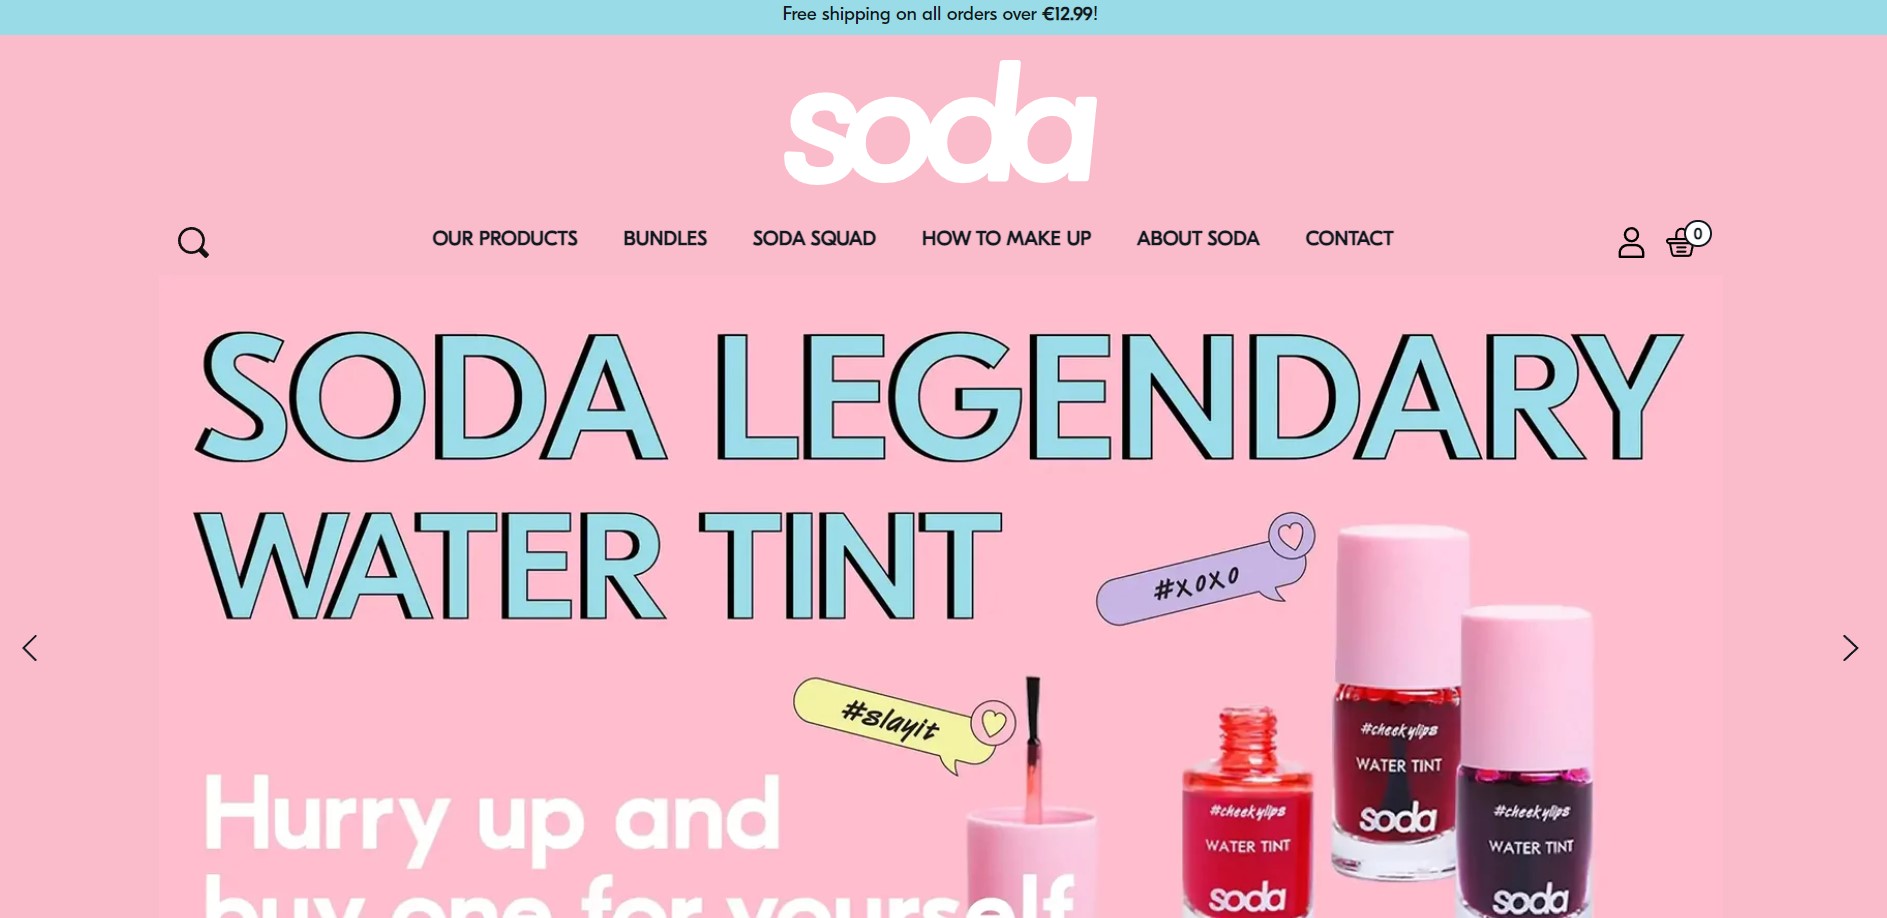 Soda makeup visual branding for beauty business